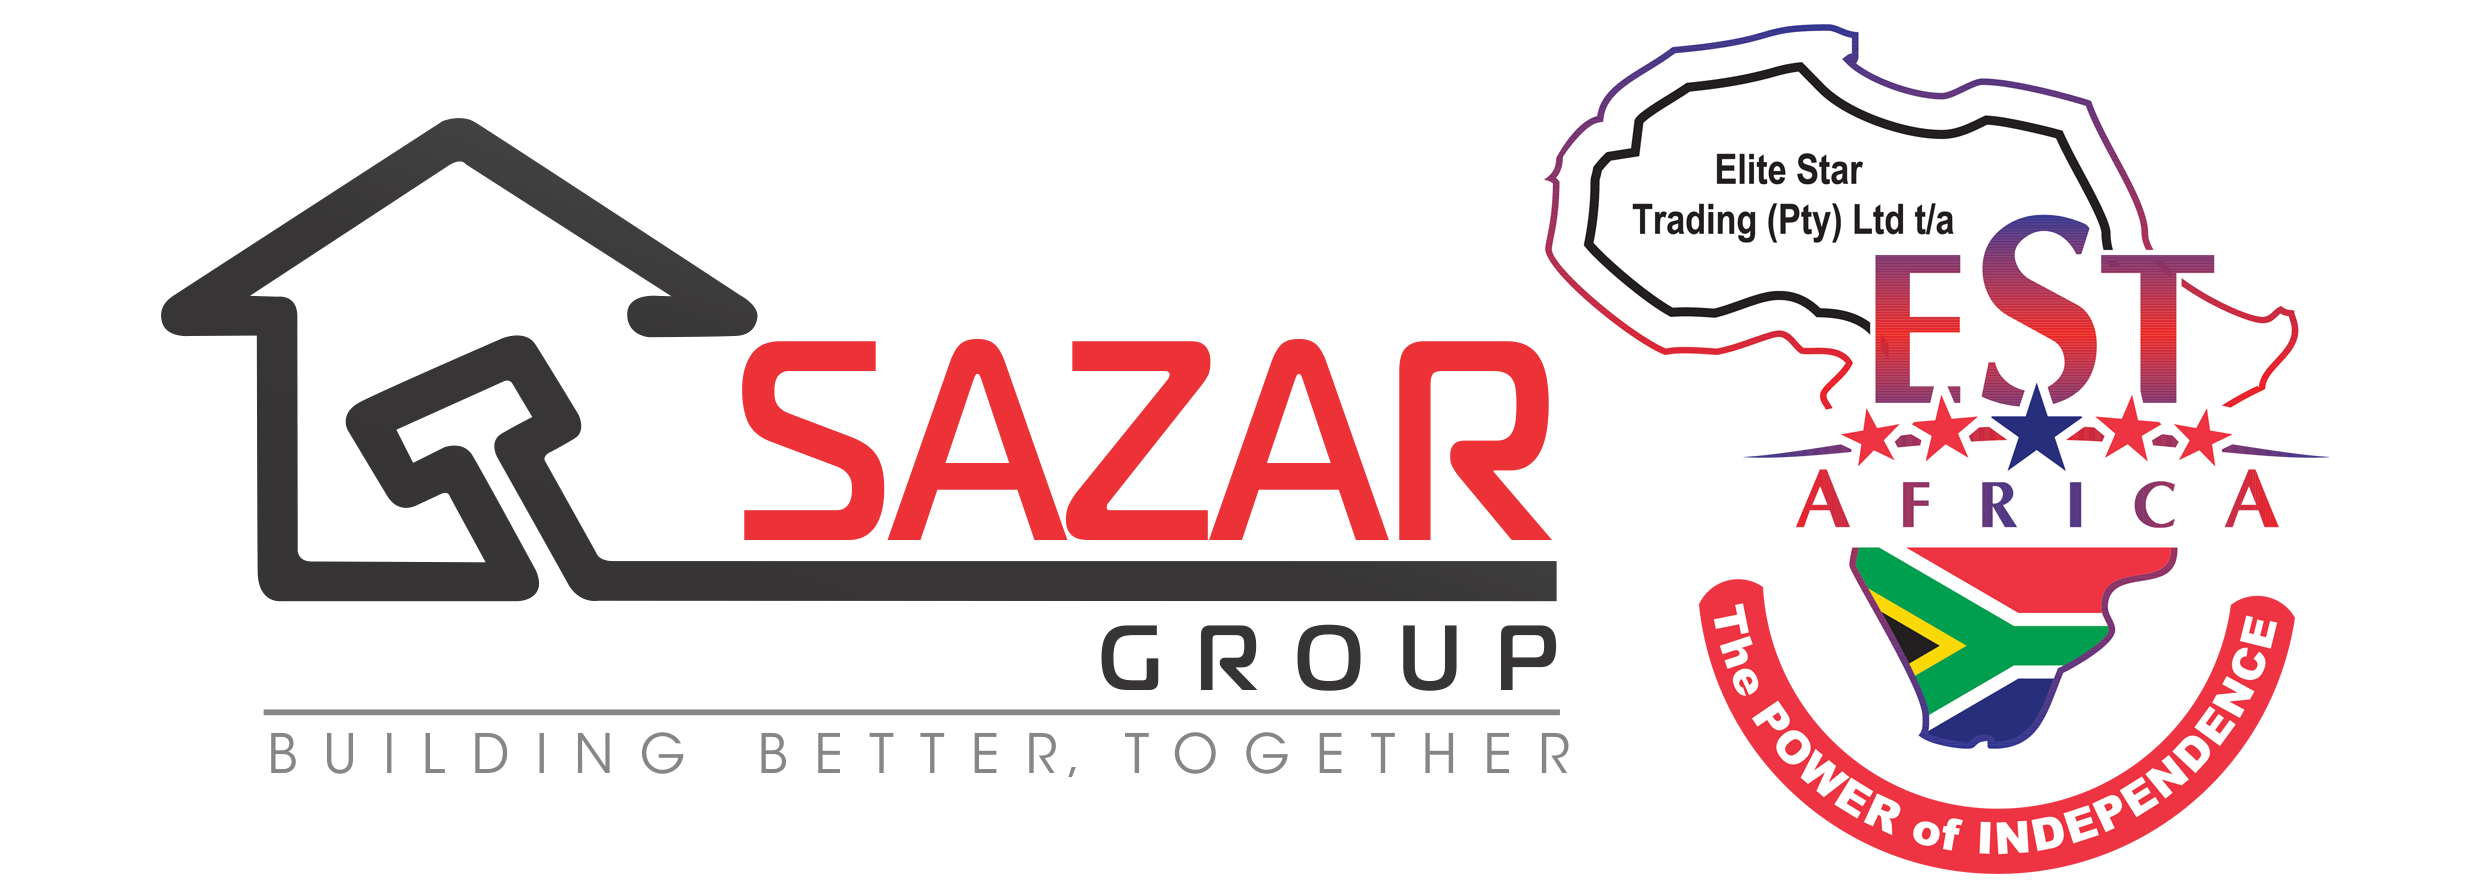 Sazar Group